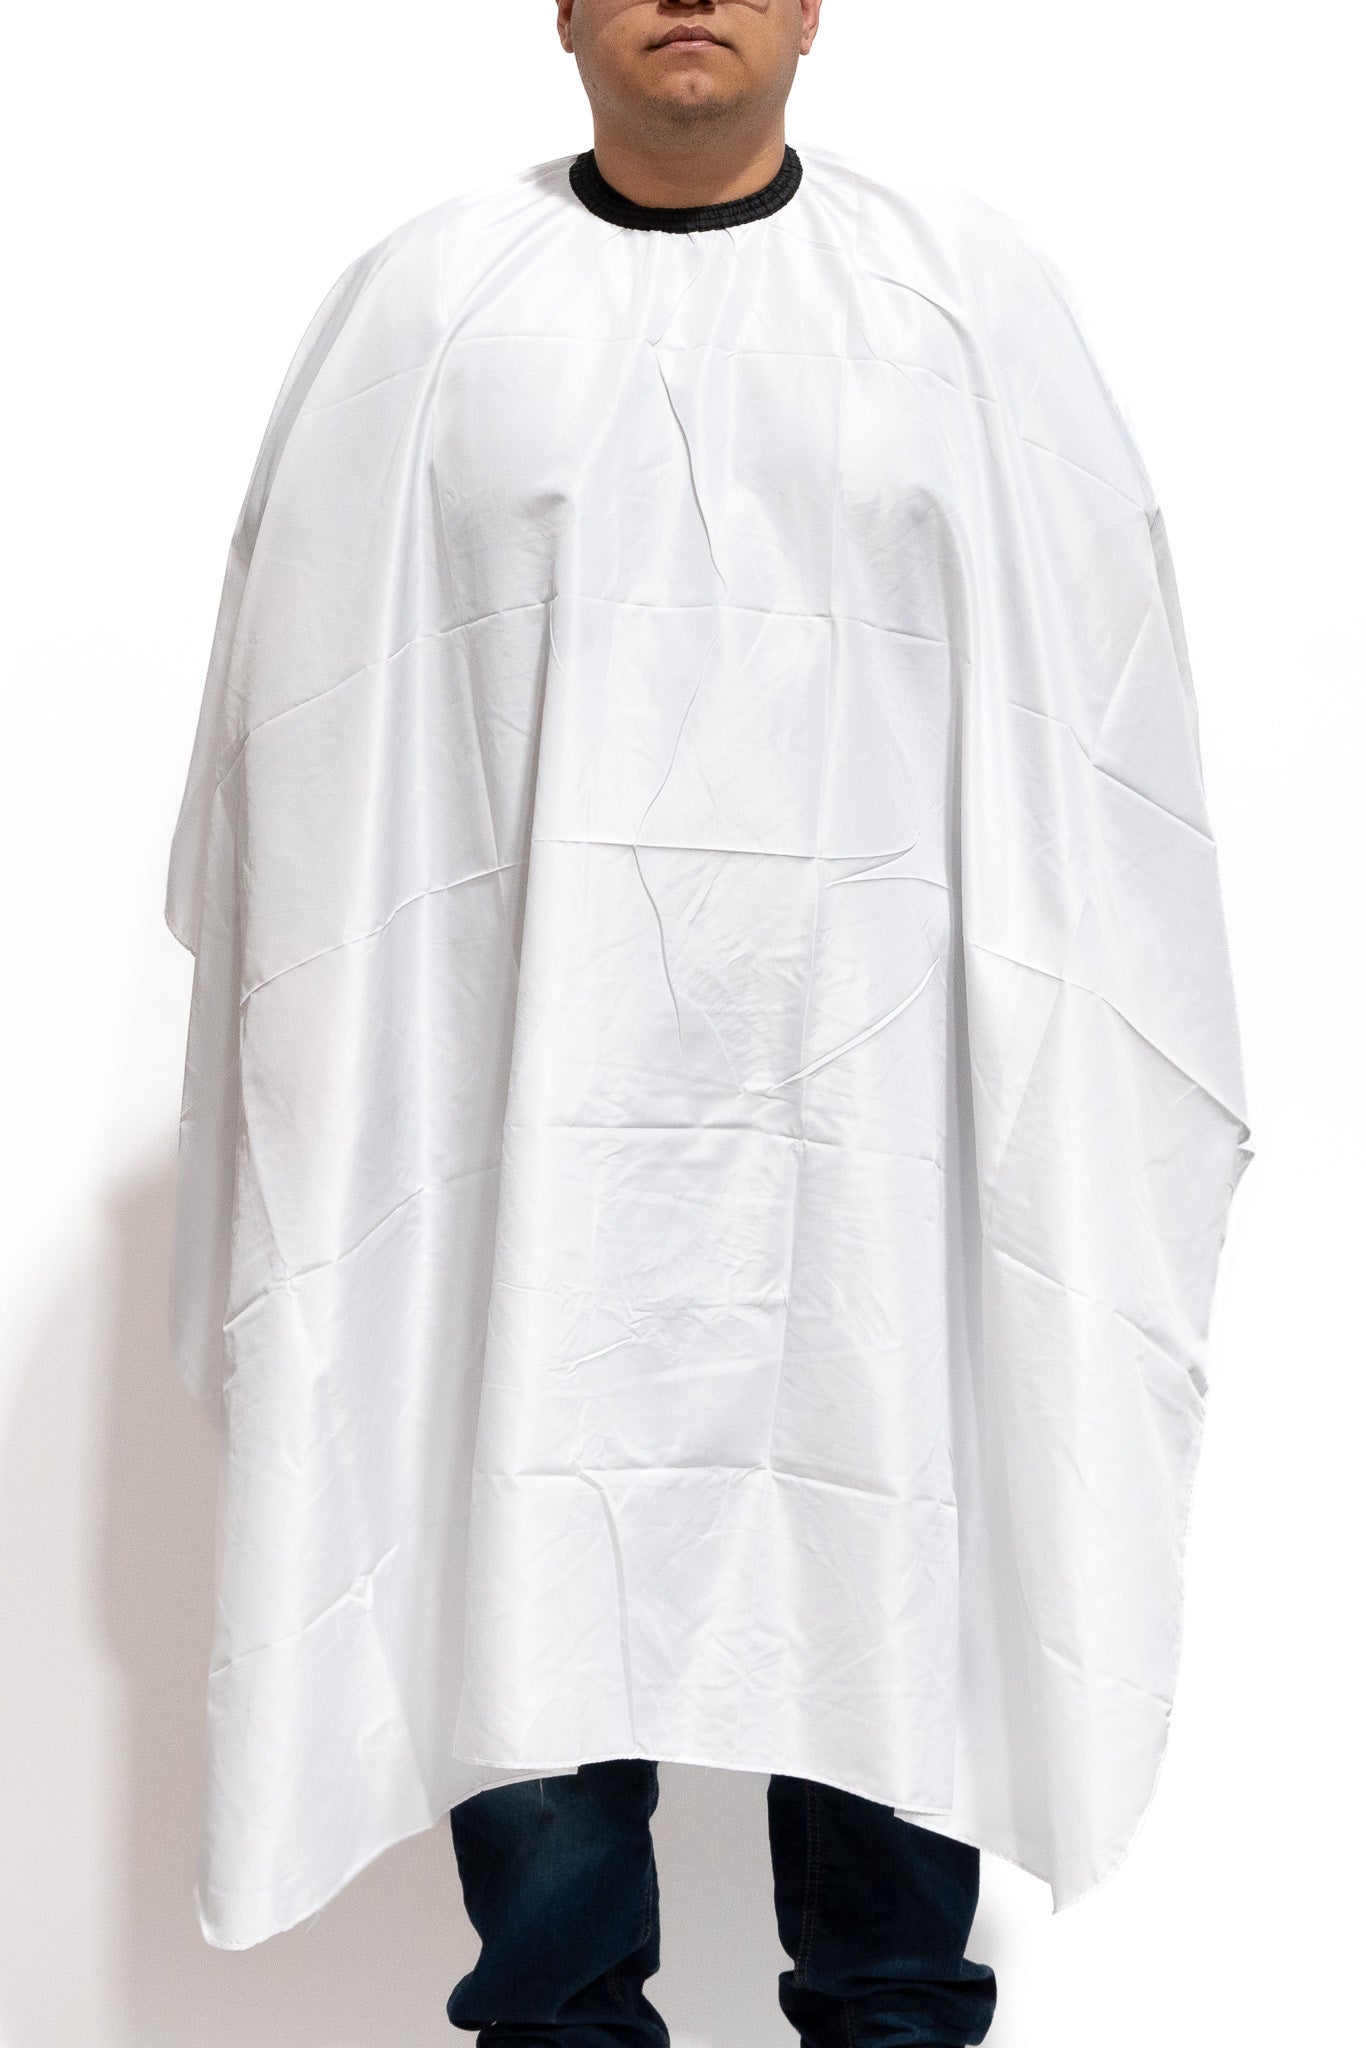 Chair Cloth, Blank, White, 12-Pack